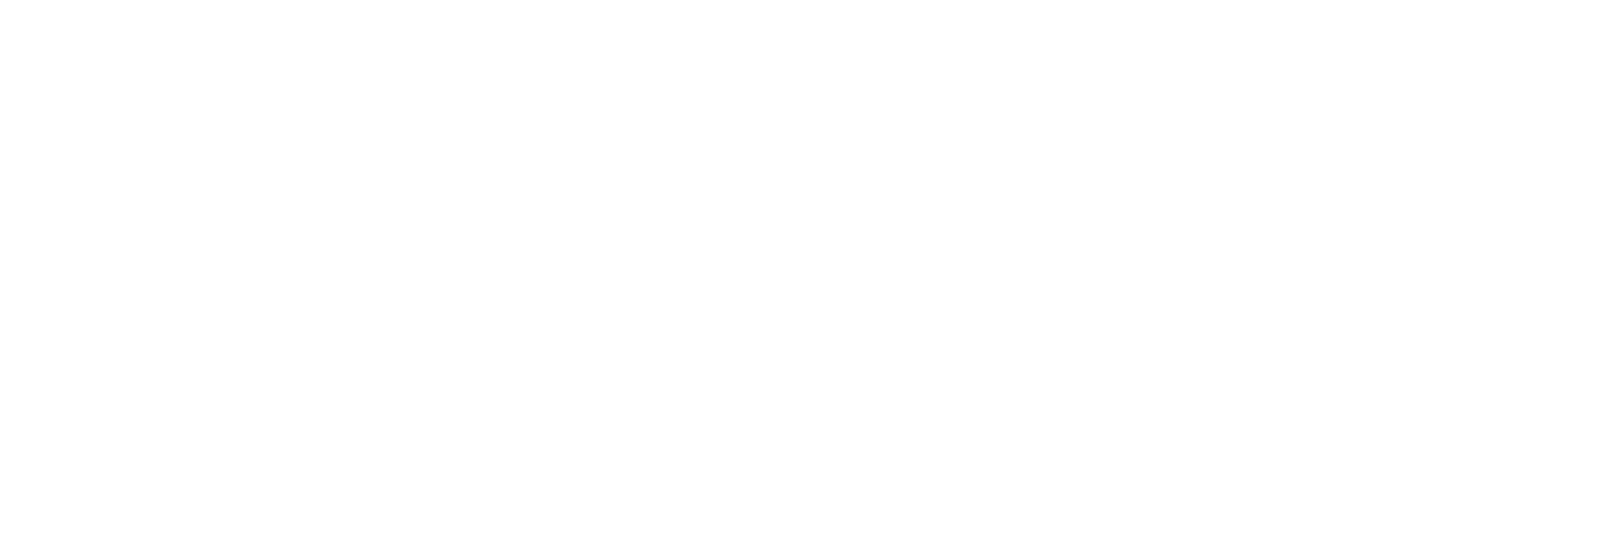 Gotham Smiles - New York Cosmetic Dentistry